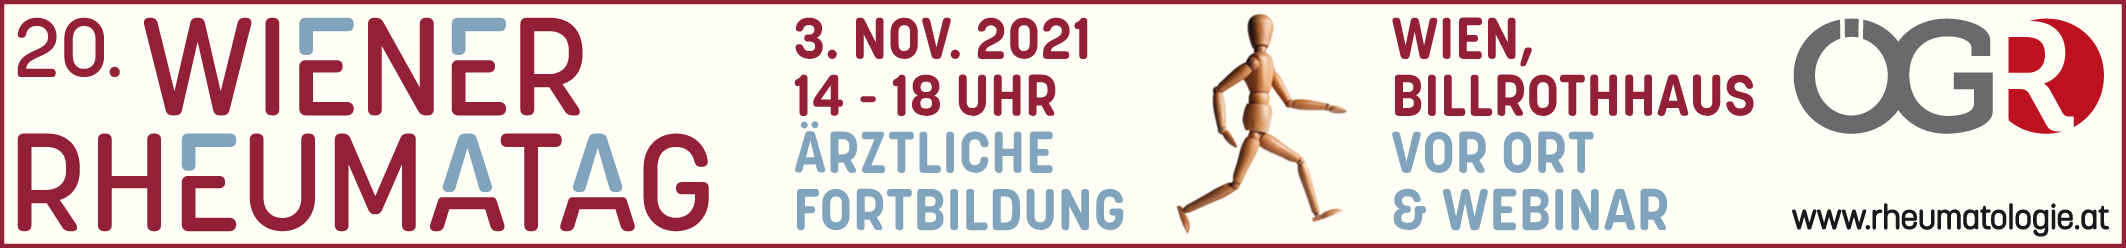 20. Wiener Rheumatag 2021